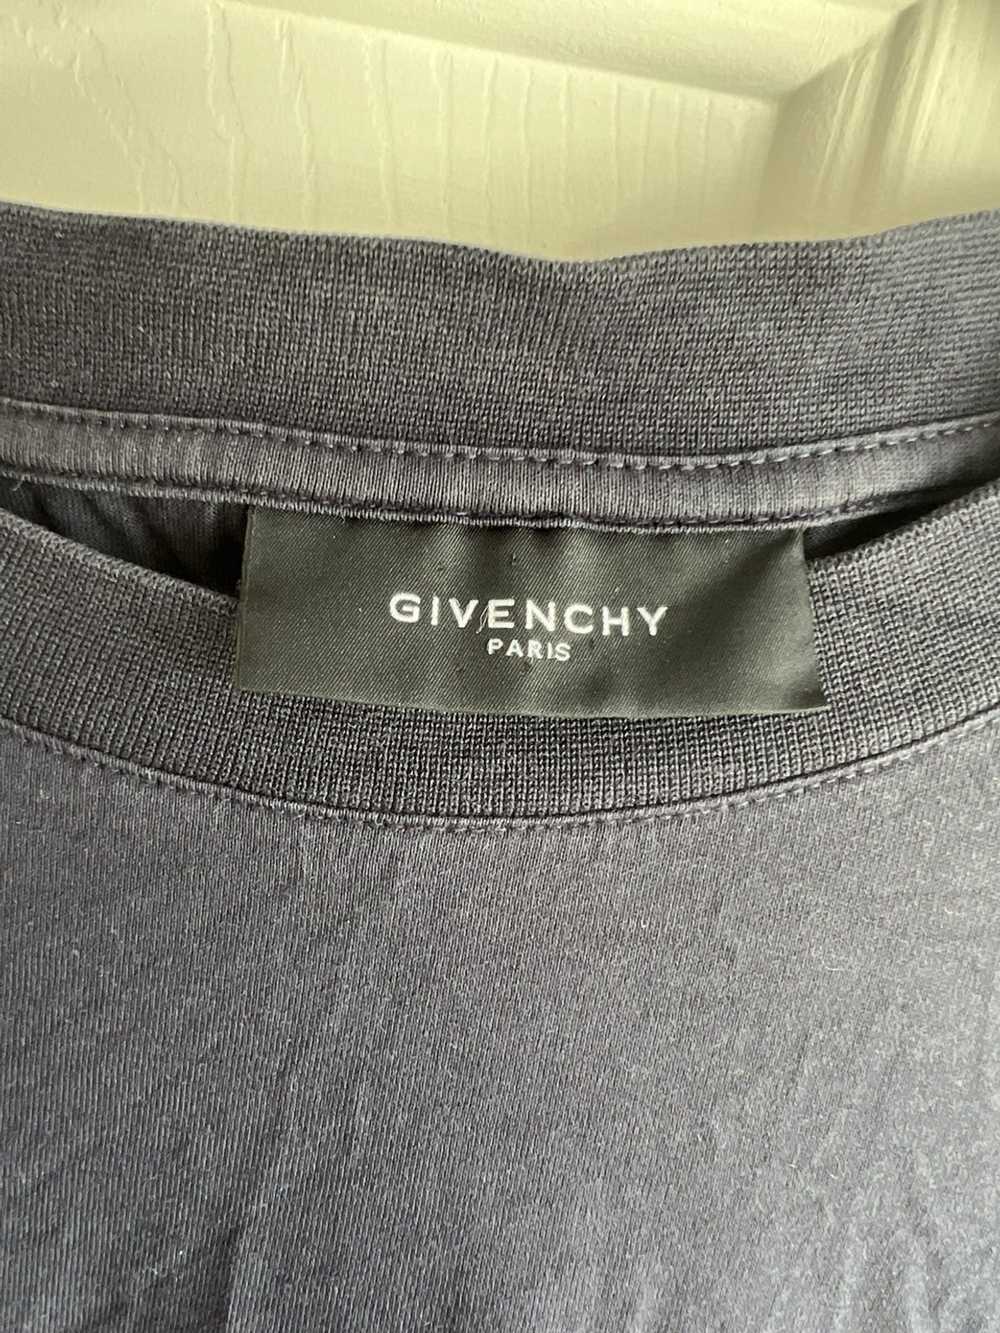 Givenchy Givenchy Navy Blue - image 4